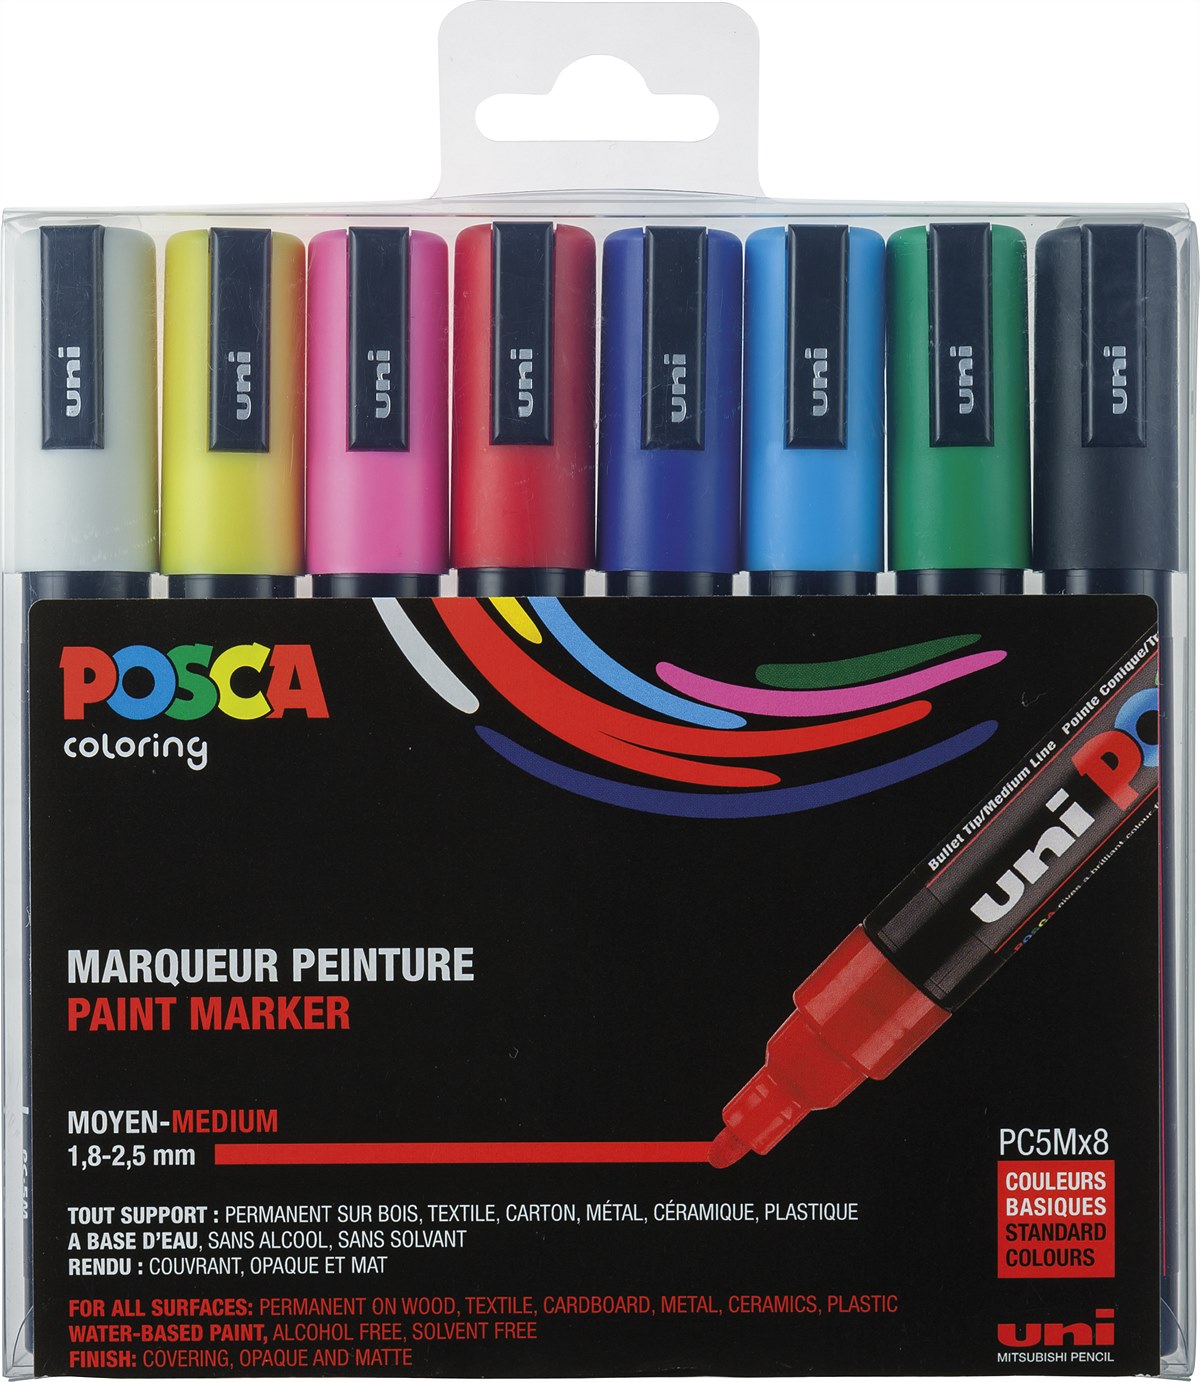 Faber-Castell_Paint marker UNI POSCA PC-5M 8pack basic_EUR 36,00